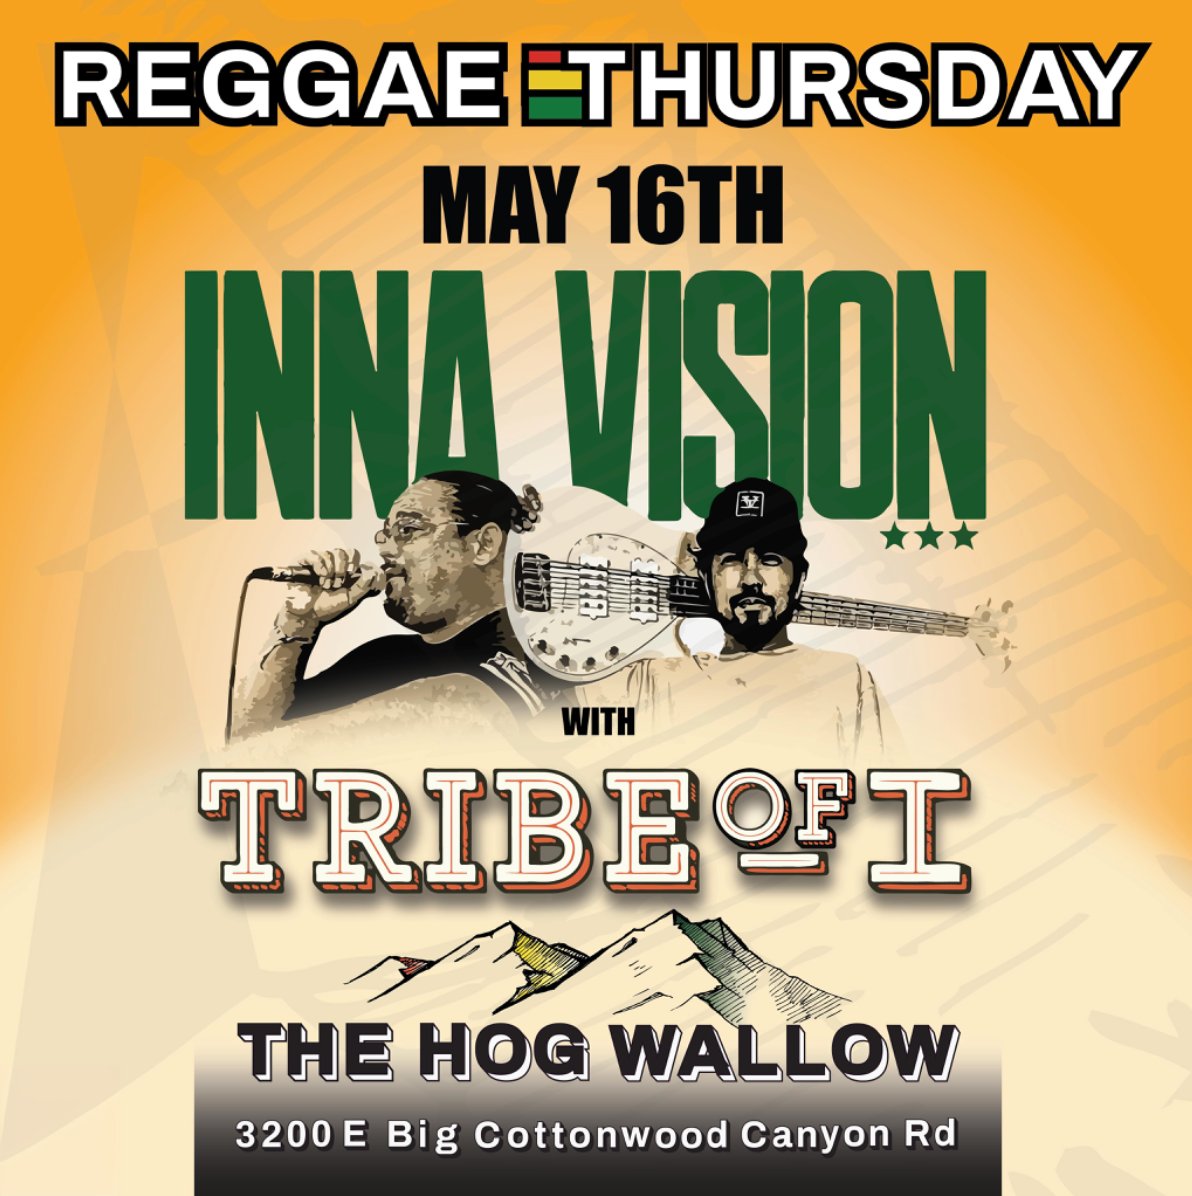 TOMORROW @ 9:00PM: Inna Vision with Tribe of I performing Reggae

Learn more @ bit.ly/44Gd6bH 

#InnaVisionwithTribeofI #Reggae #LiveMusicSLC #CottonwoodHeights